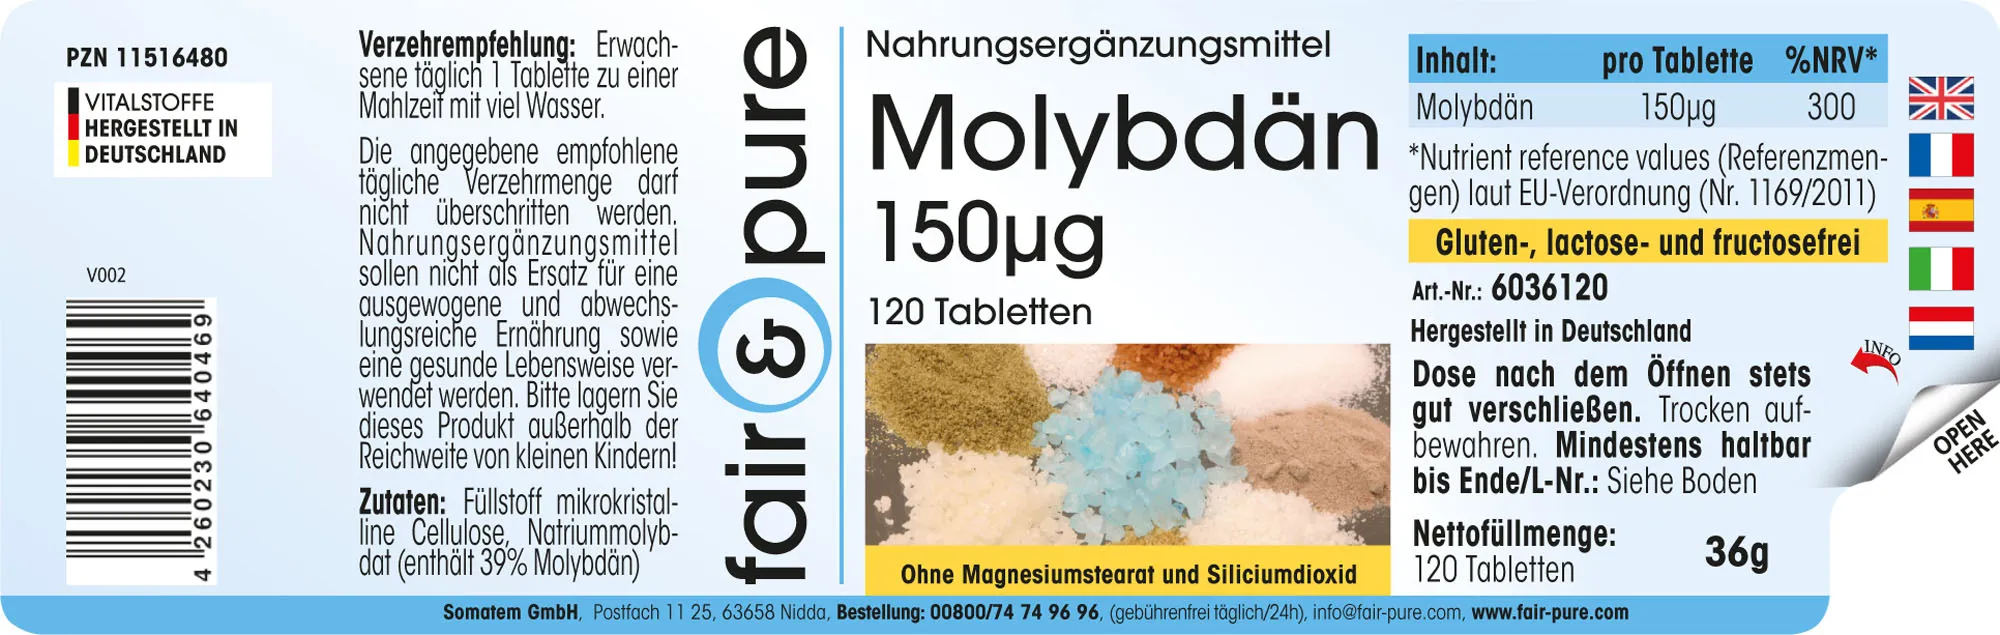 Molybdenum 150µg